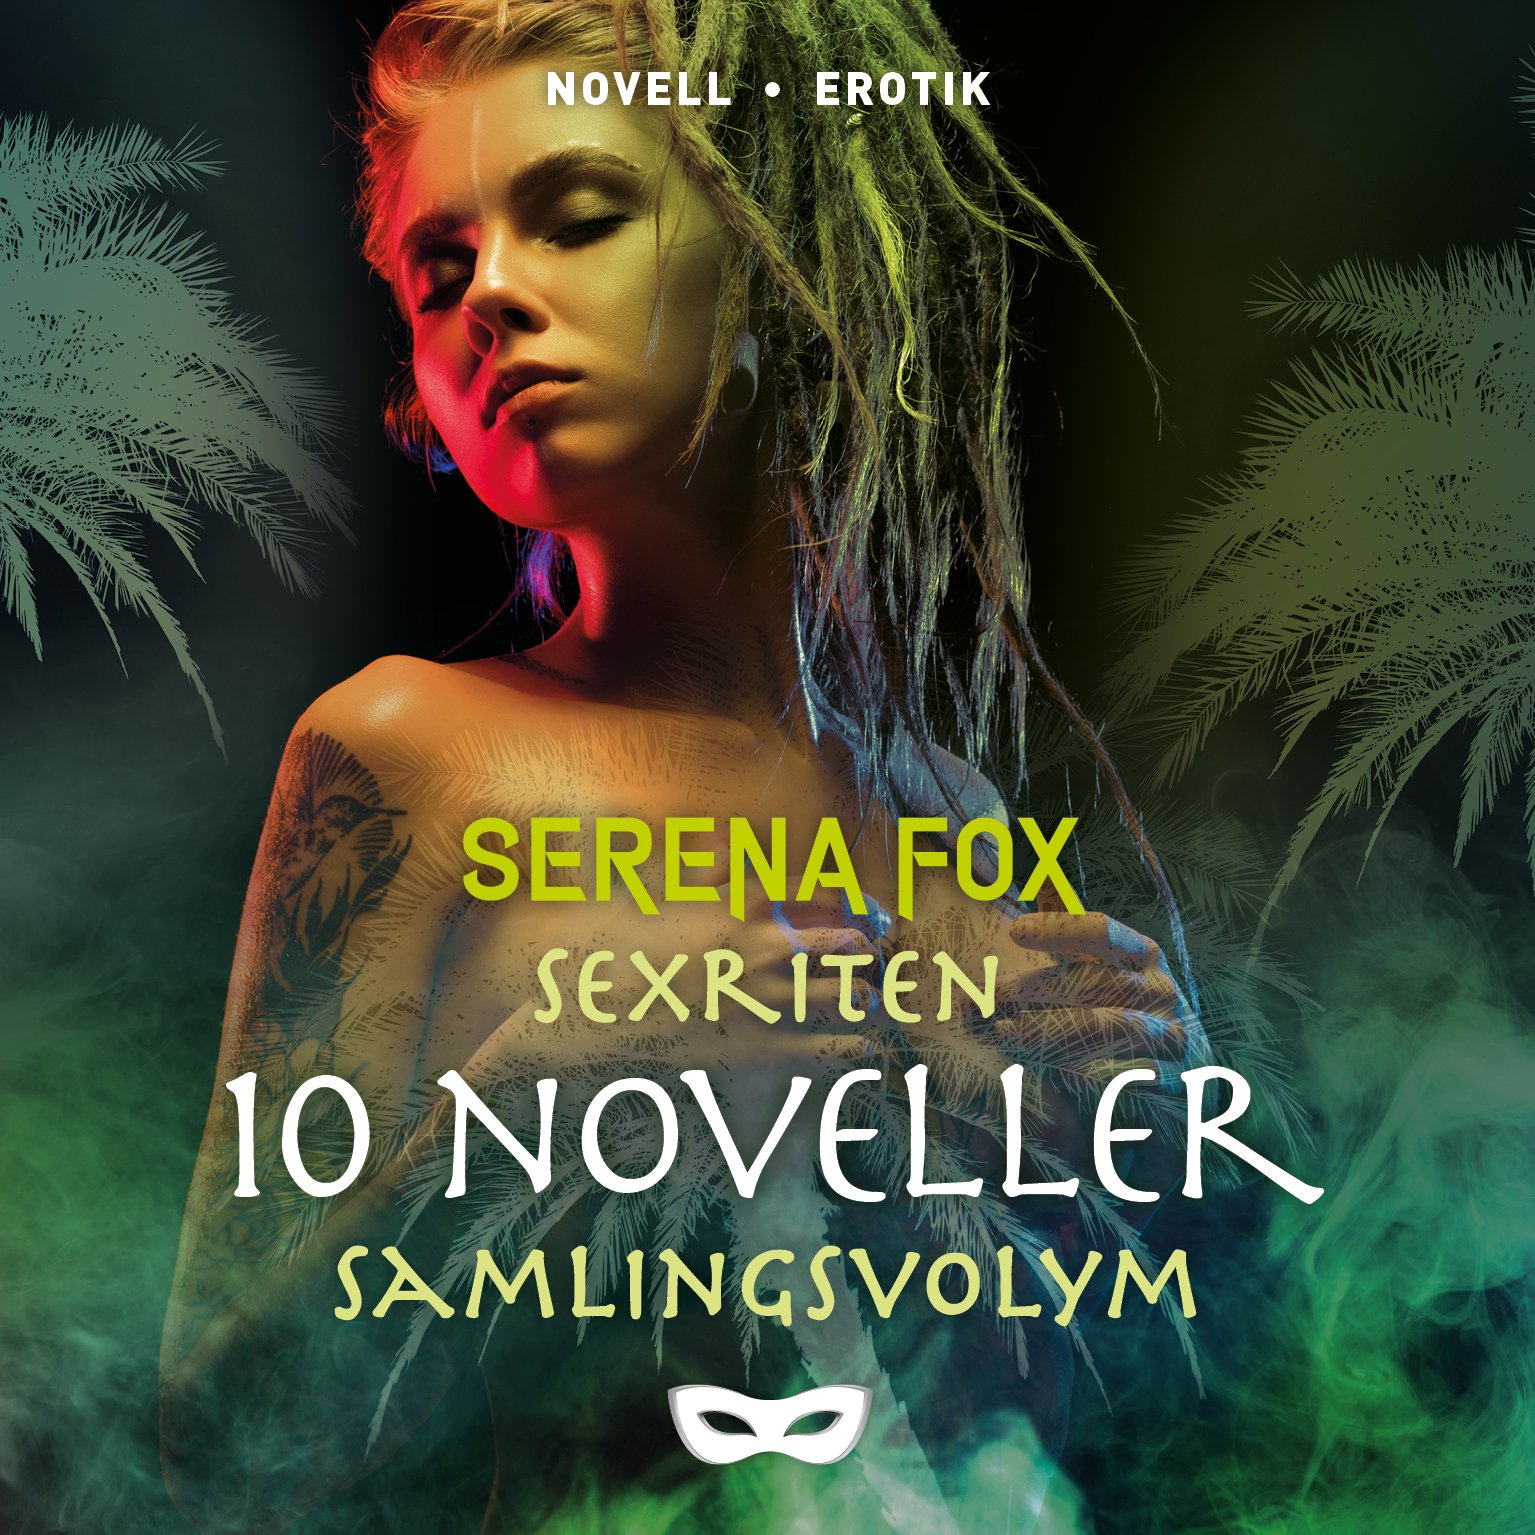 Serena Fox